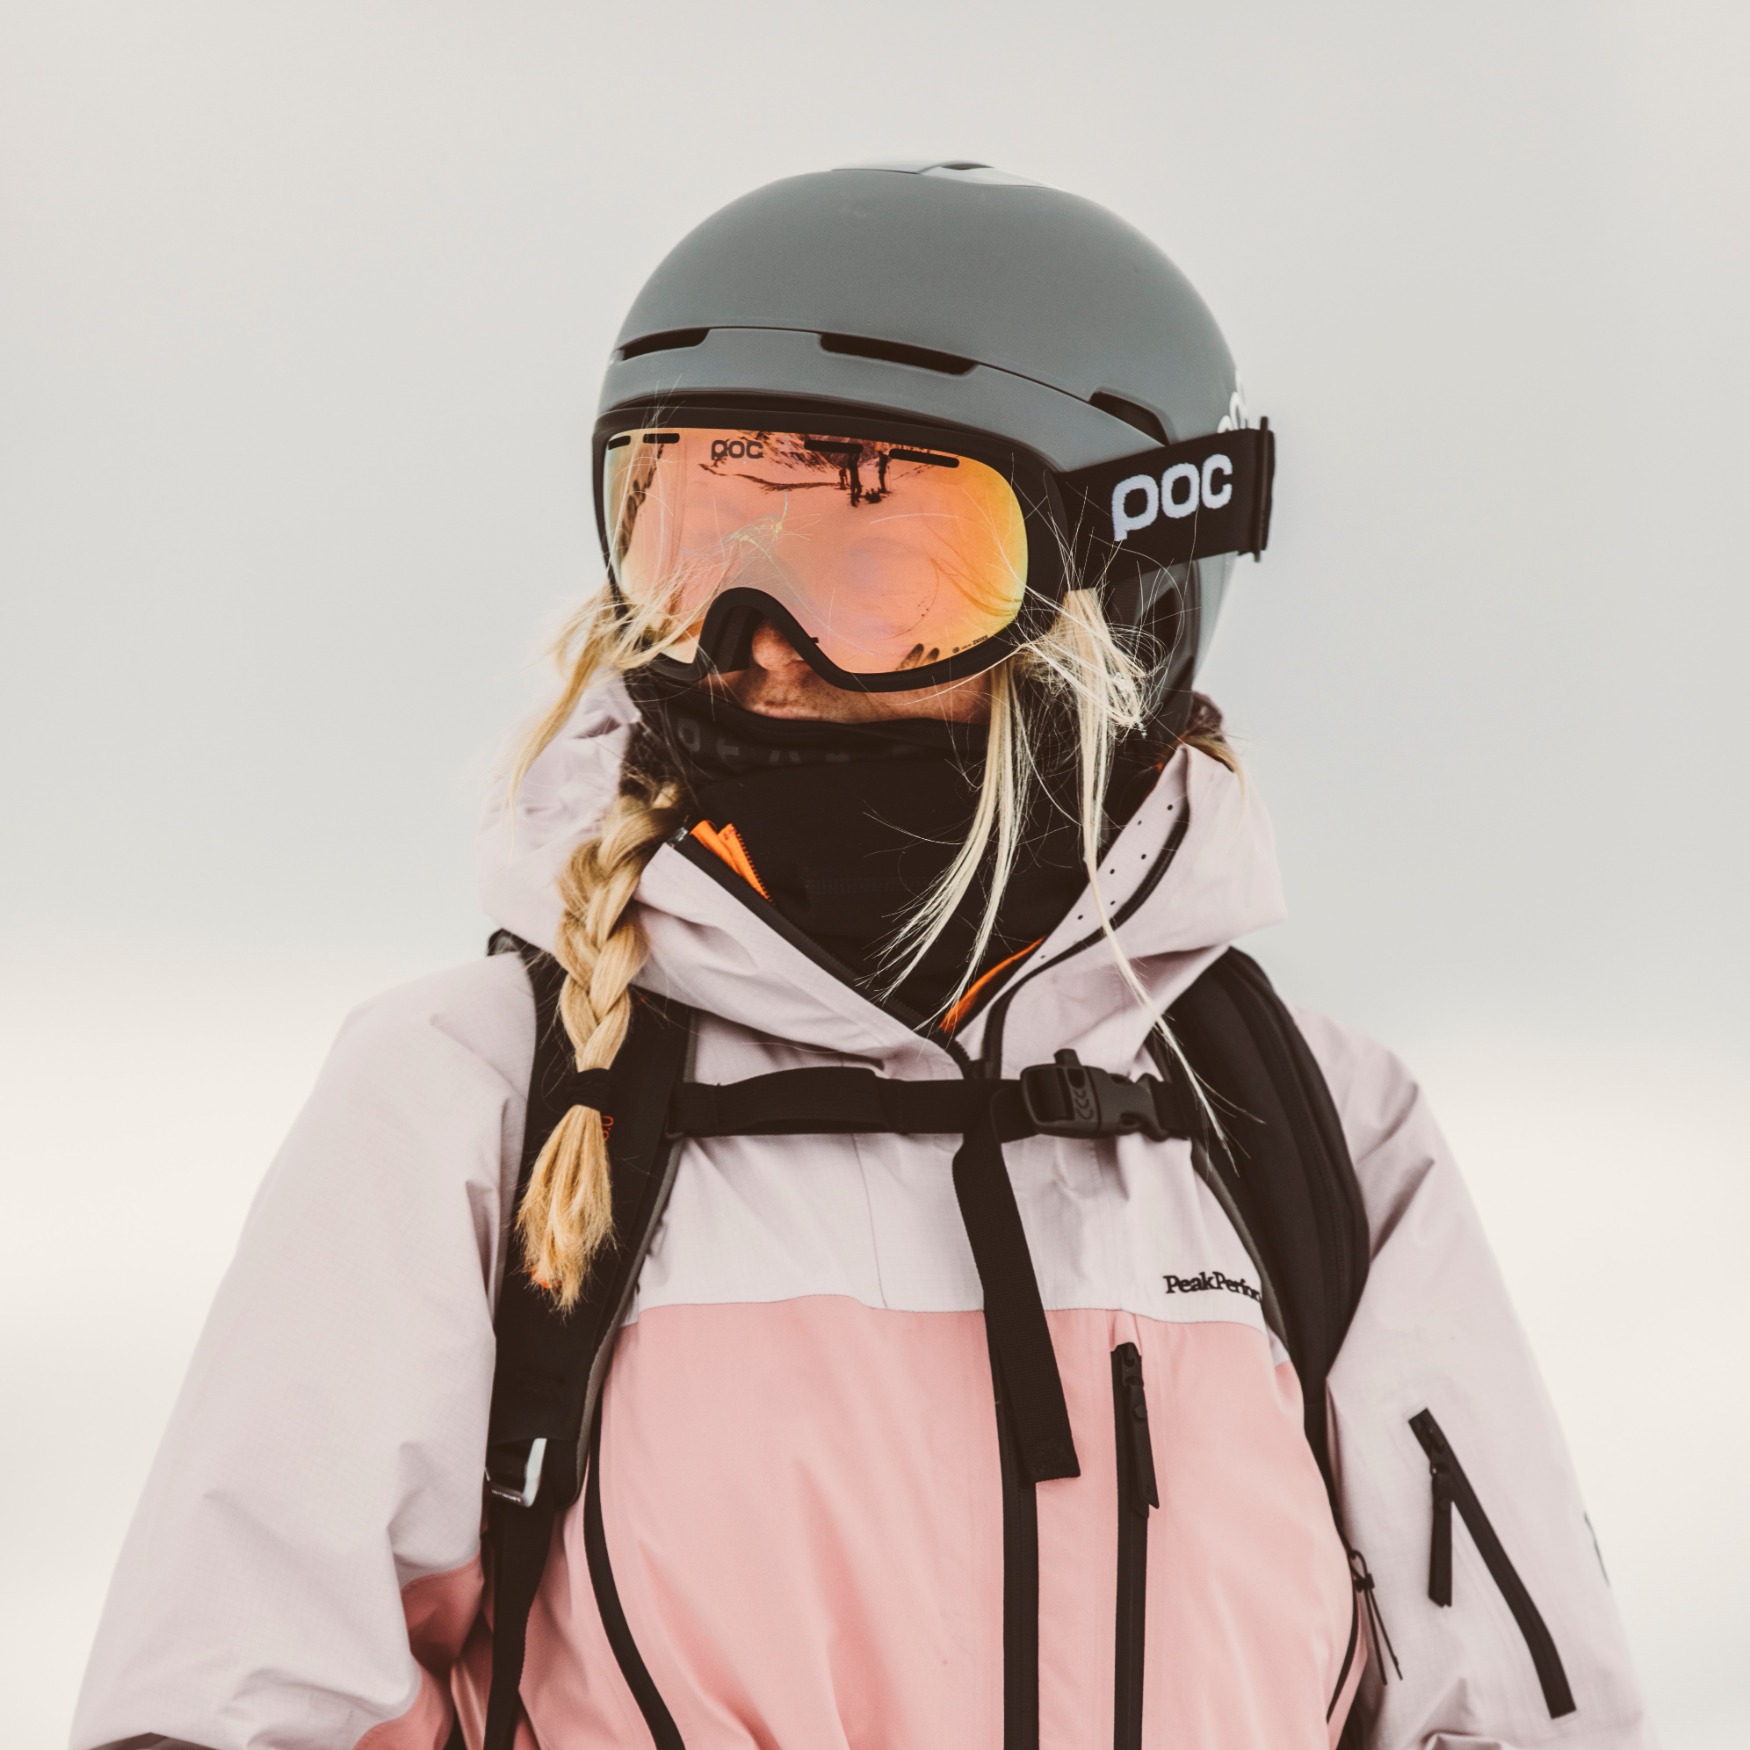 Leerling Langskomen innovatie Skihelmen | Plutosport